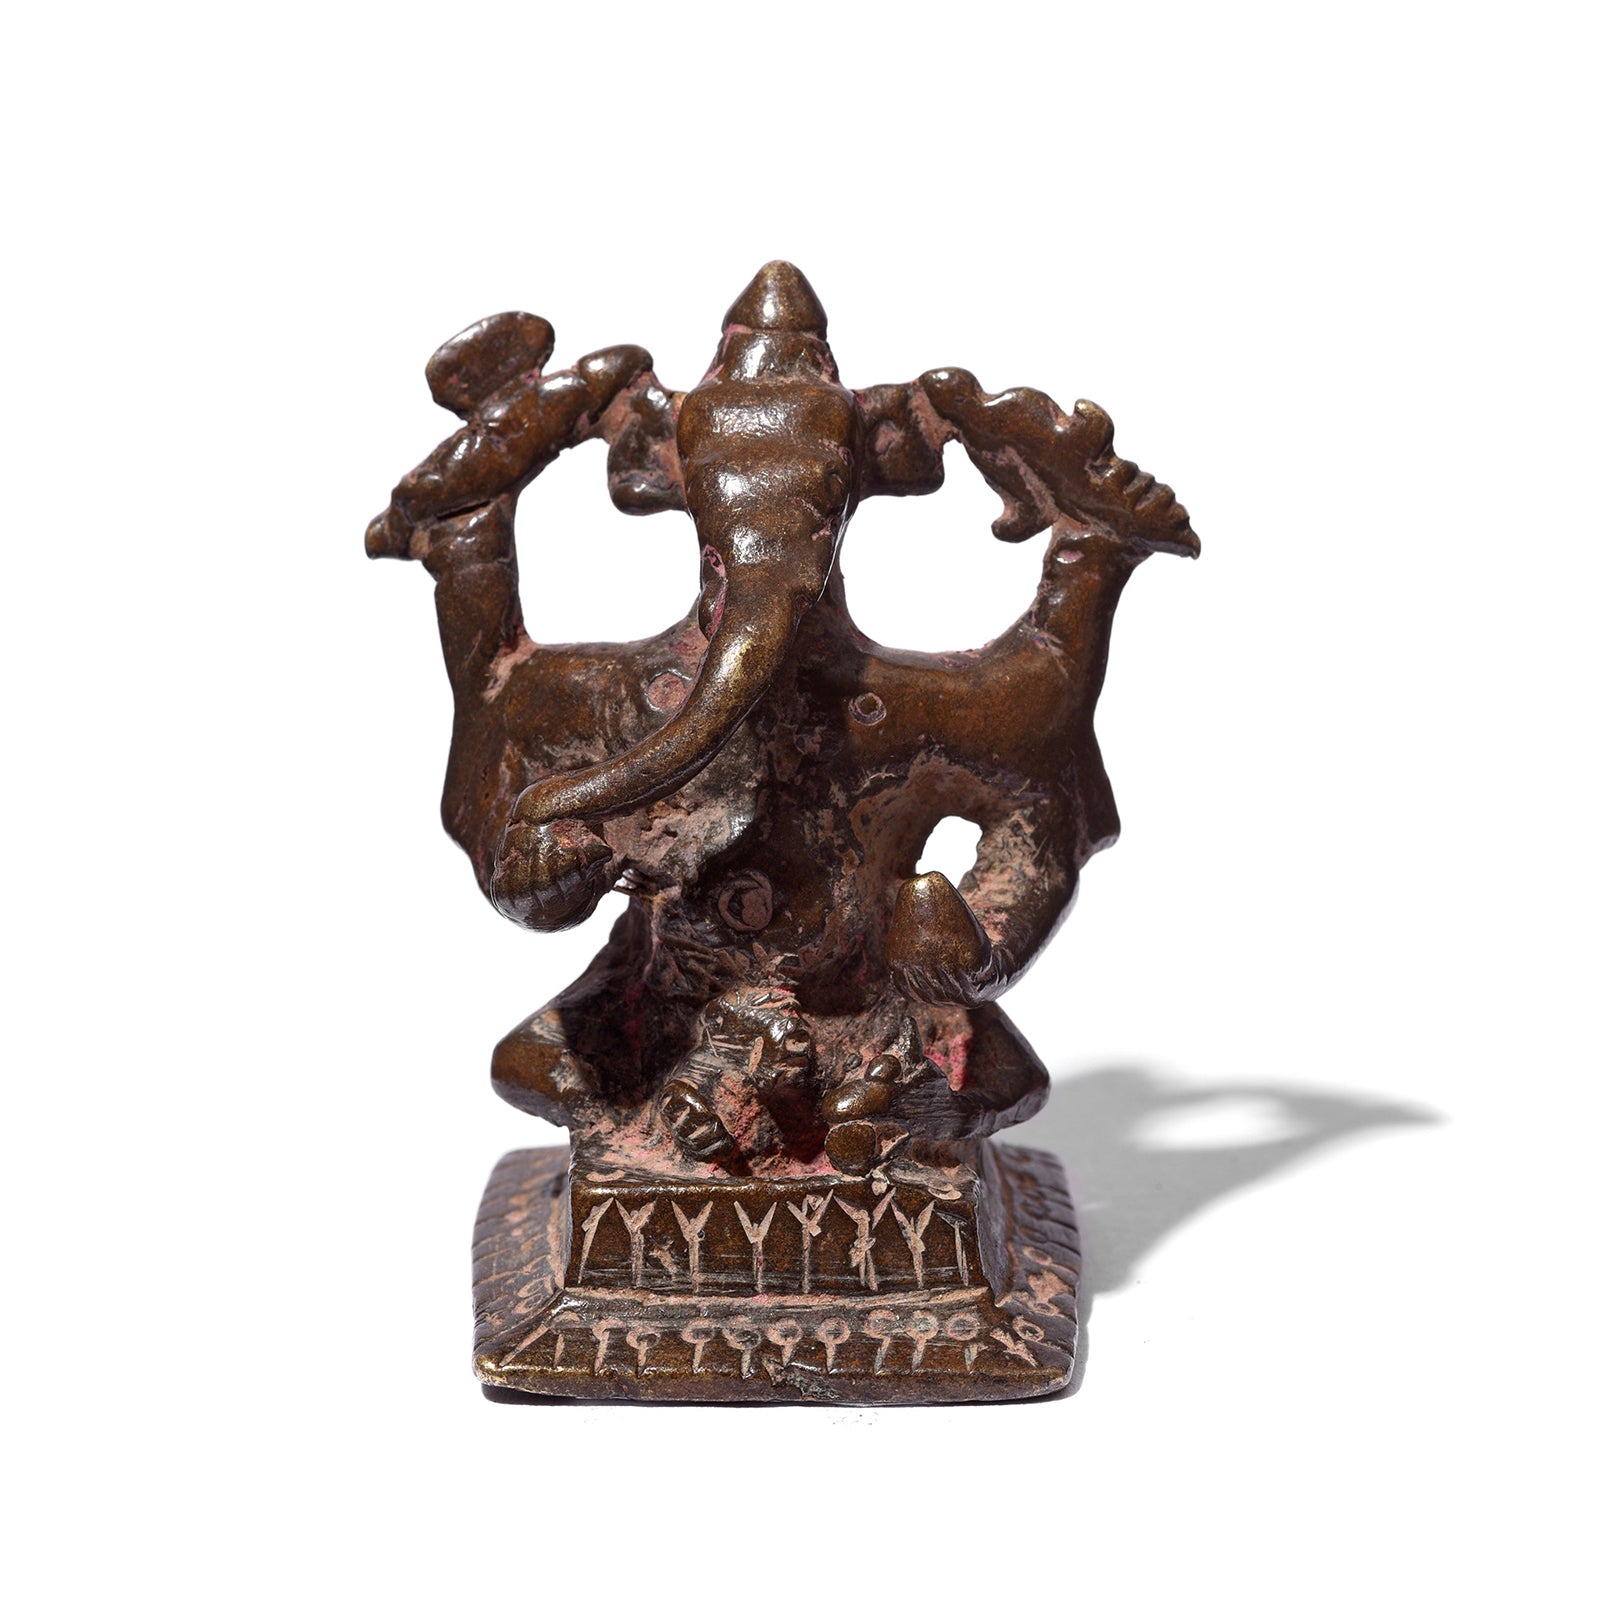 Antique Bronze Valampuri Ganesha Statue From Tamil Nadu | Indigo Antiques